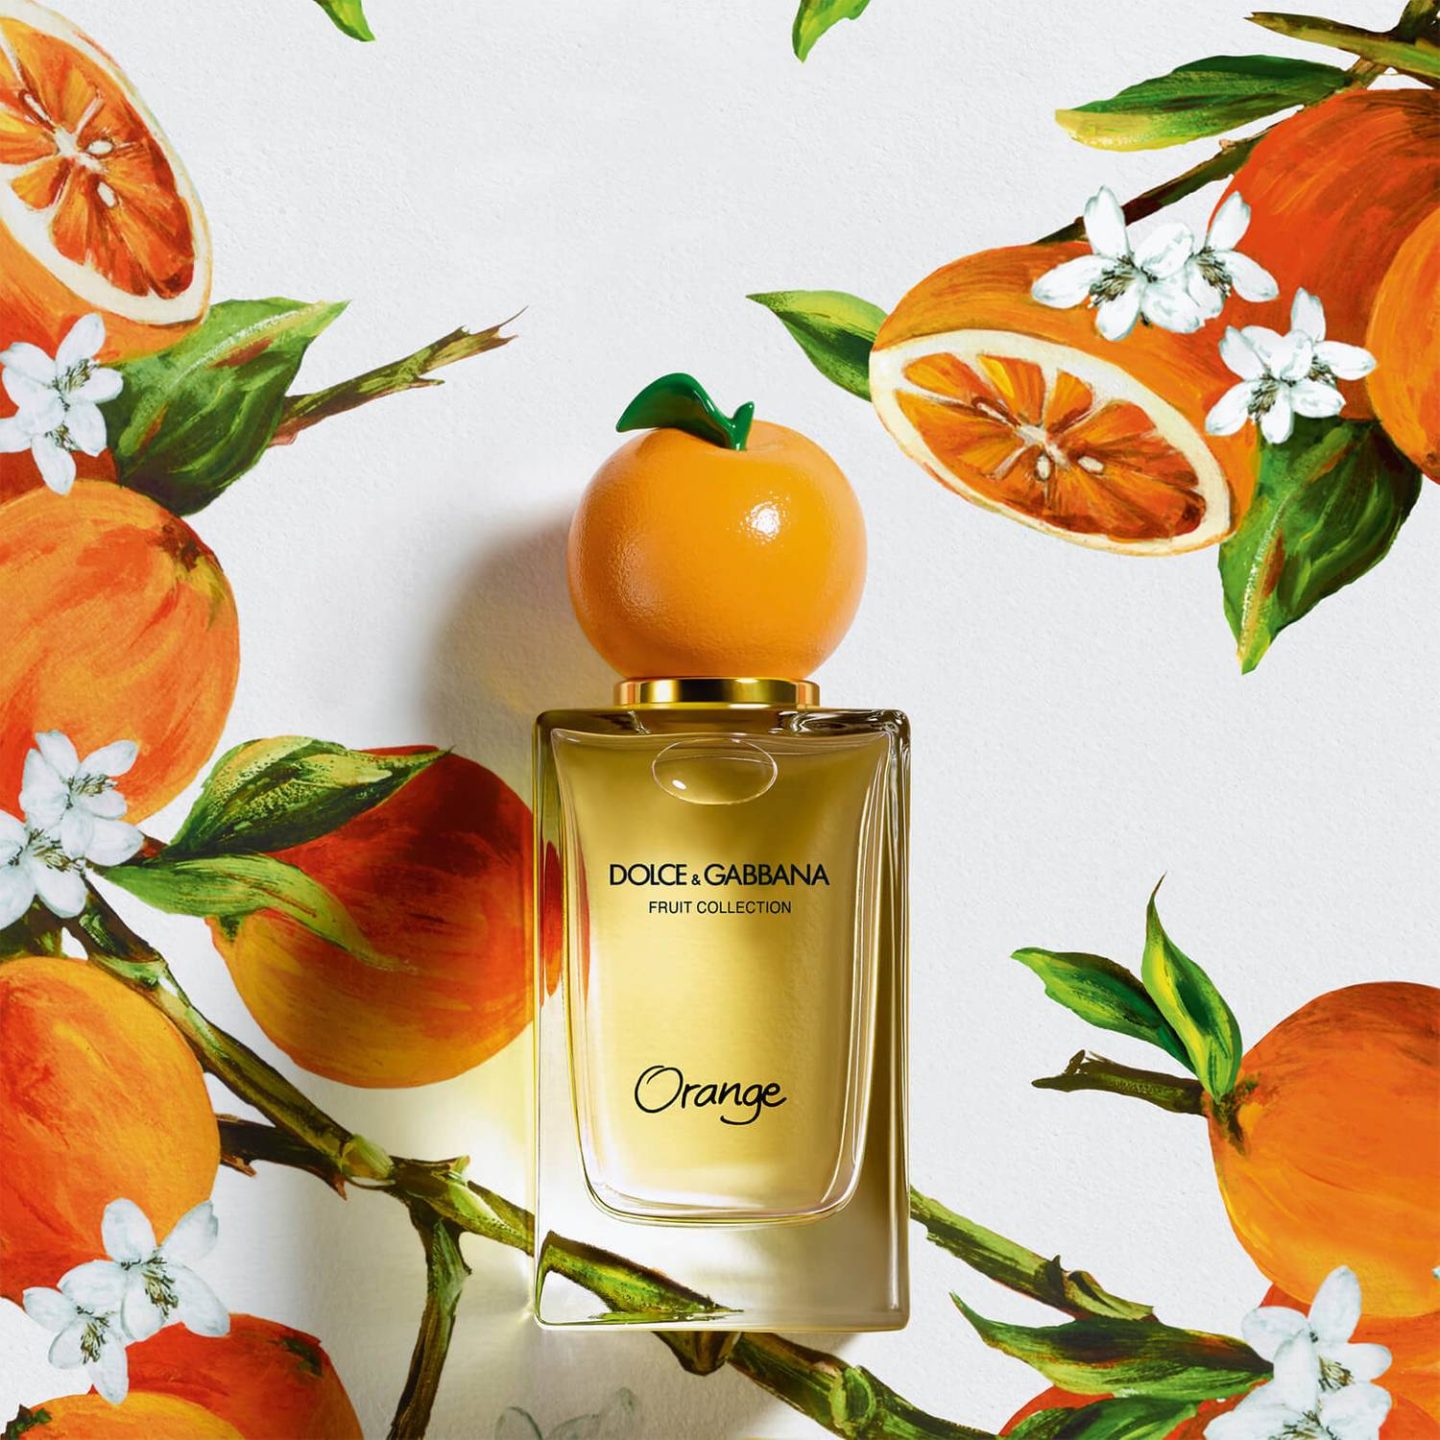 Dolce-Gabbana-Fruit-Collection-Orange
orange perfume